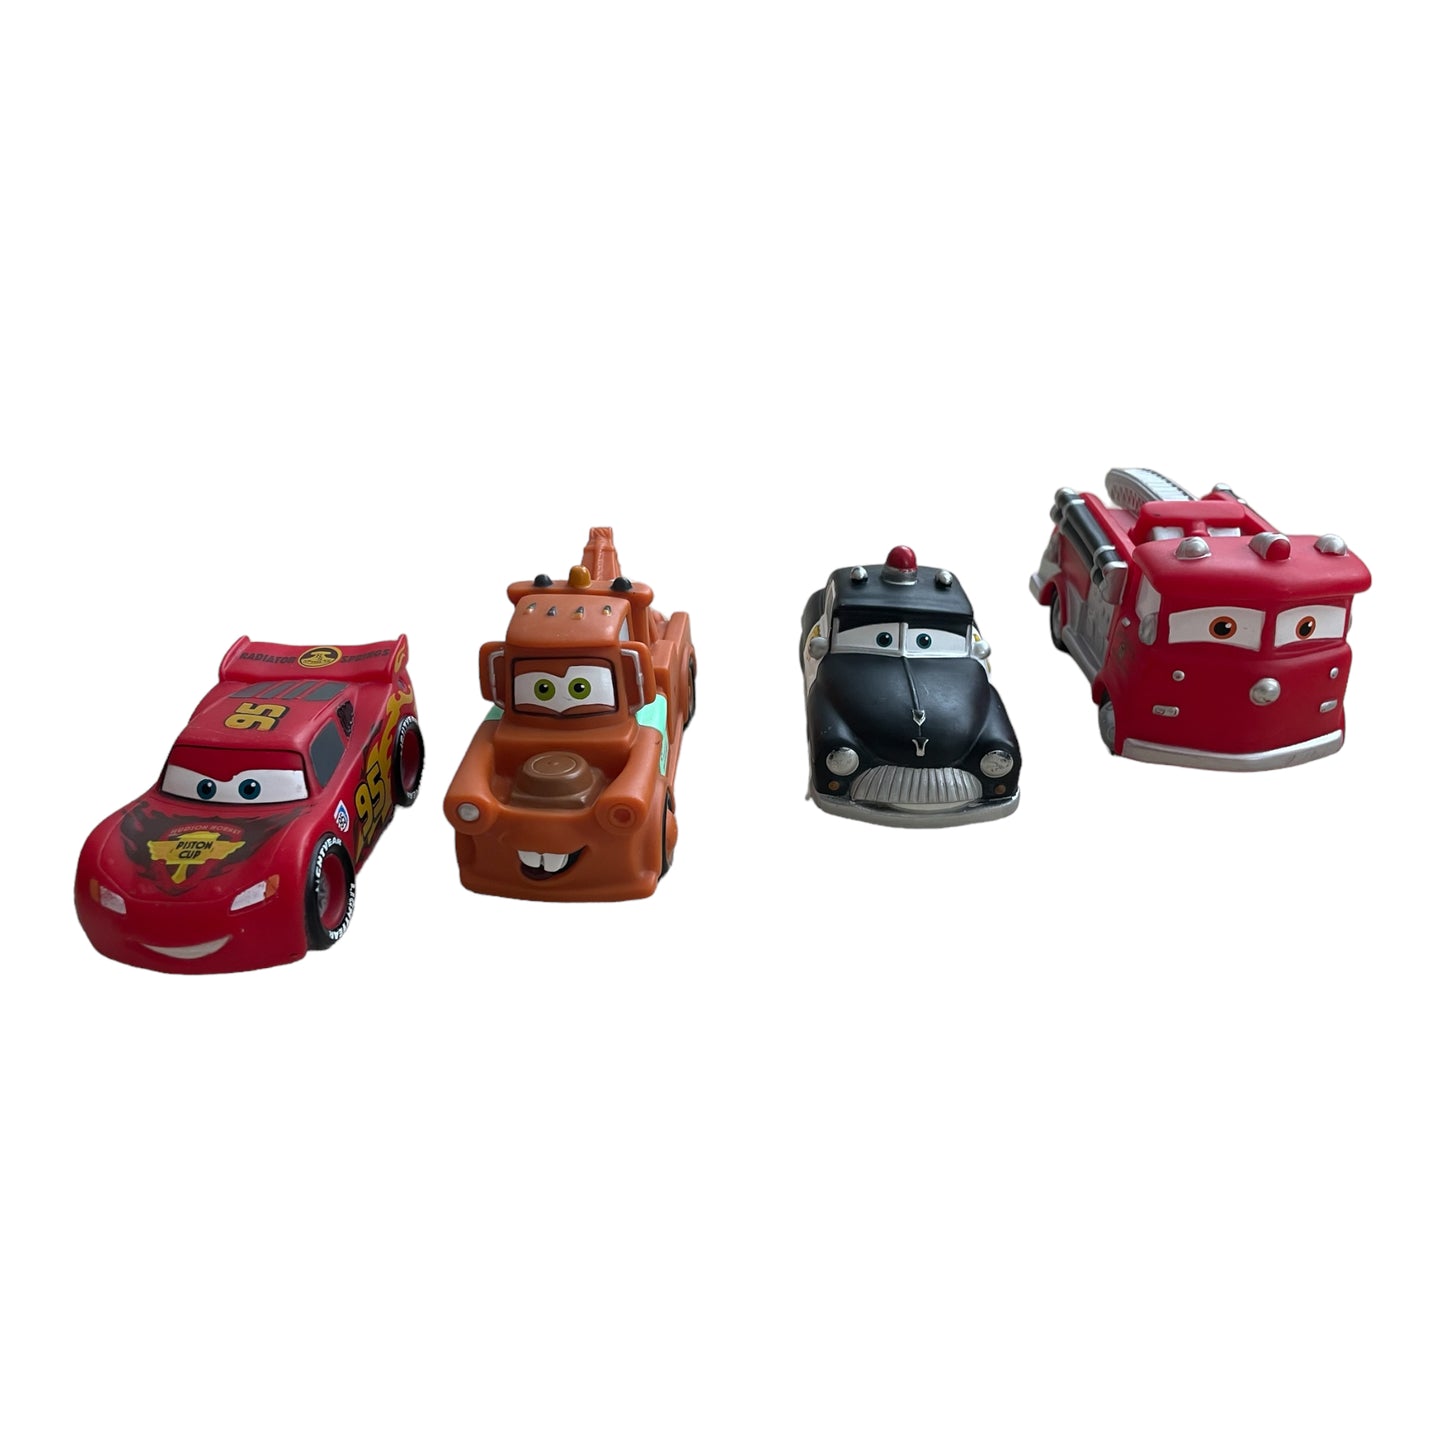 Disney Store Disney Pixar Cars Bath Toy Set